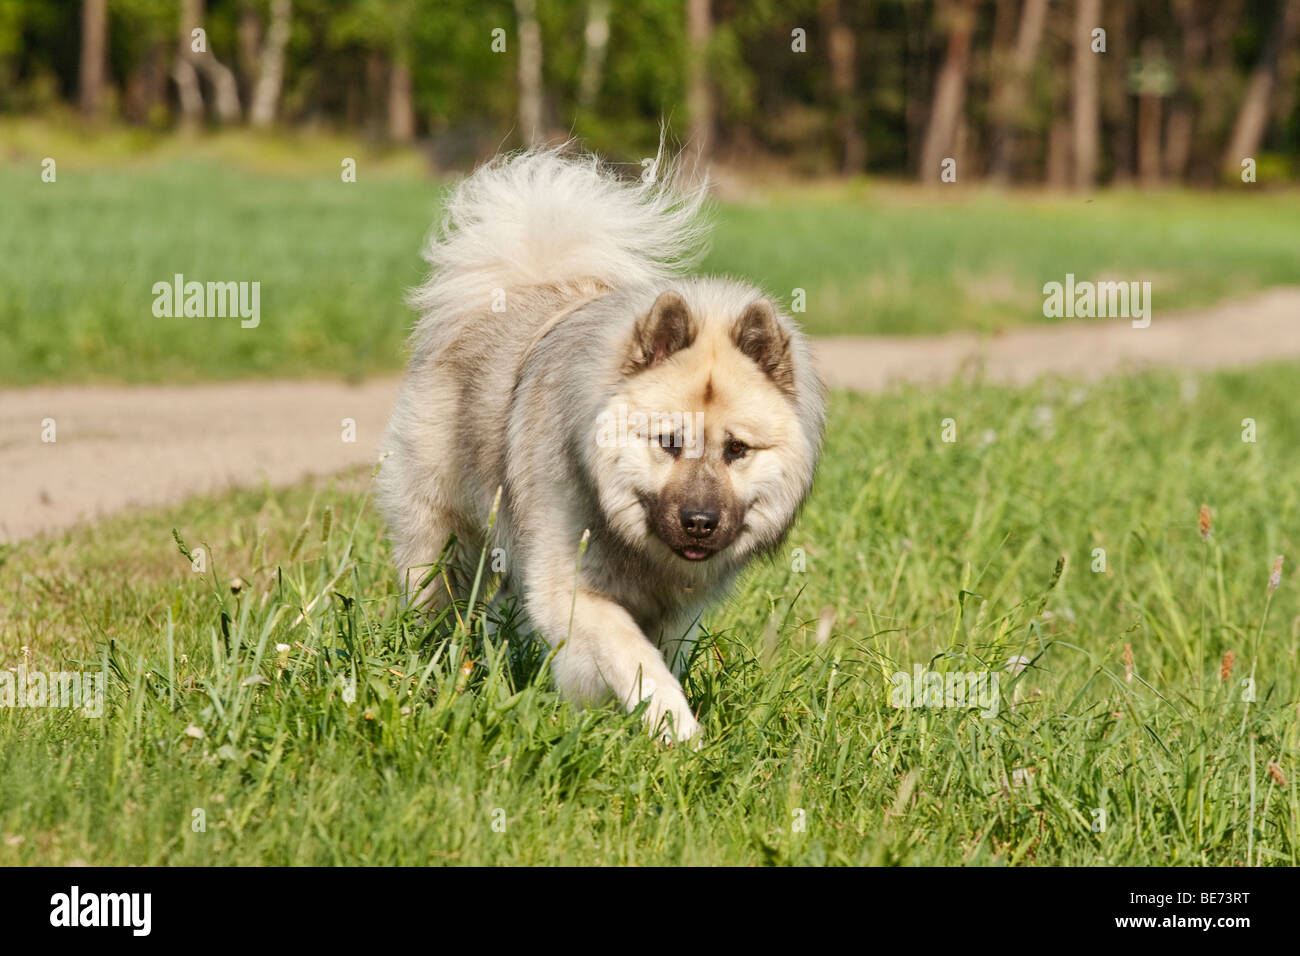 Eurasier dog walking across a lawn Stock Photo